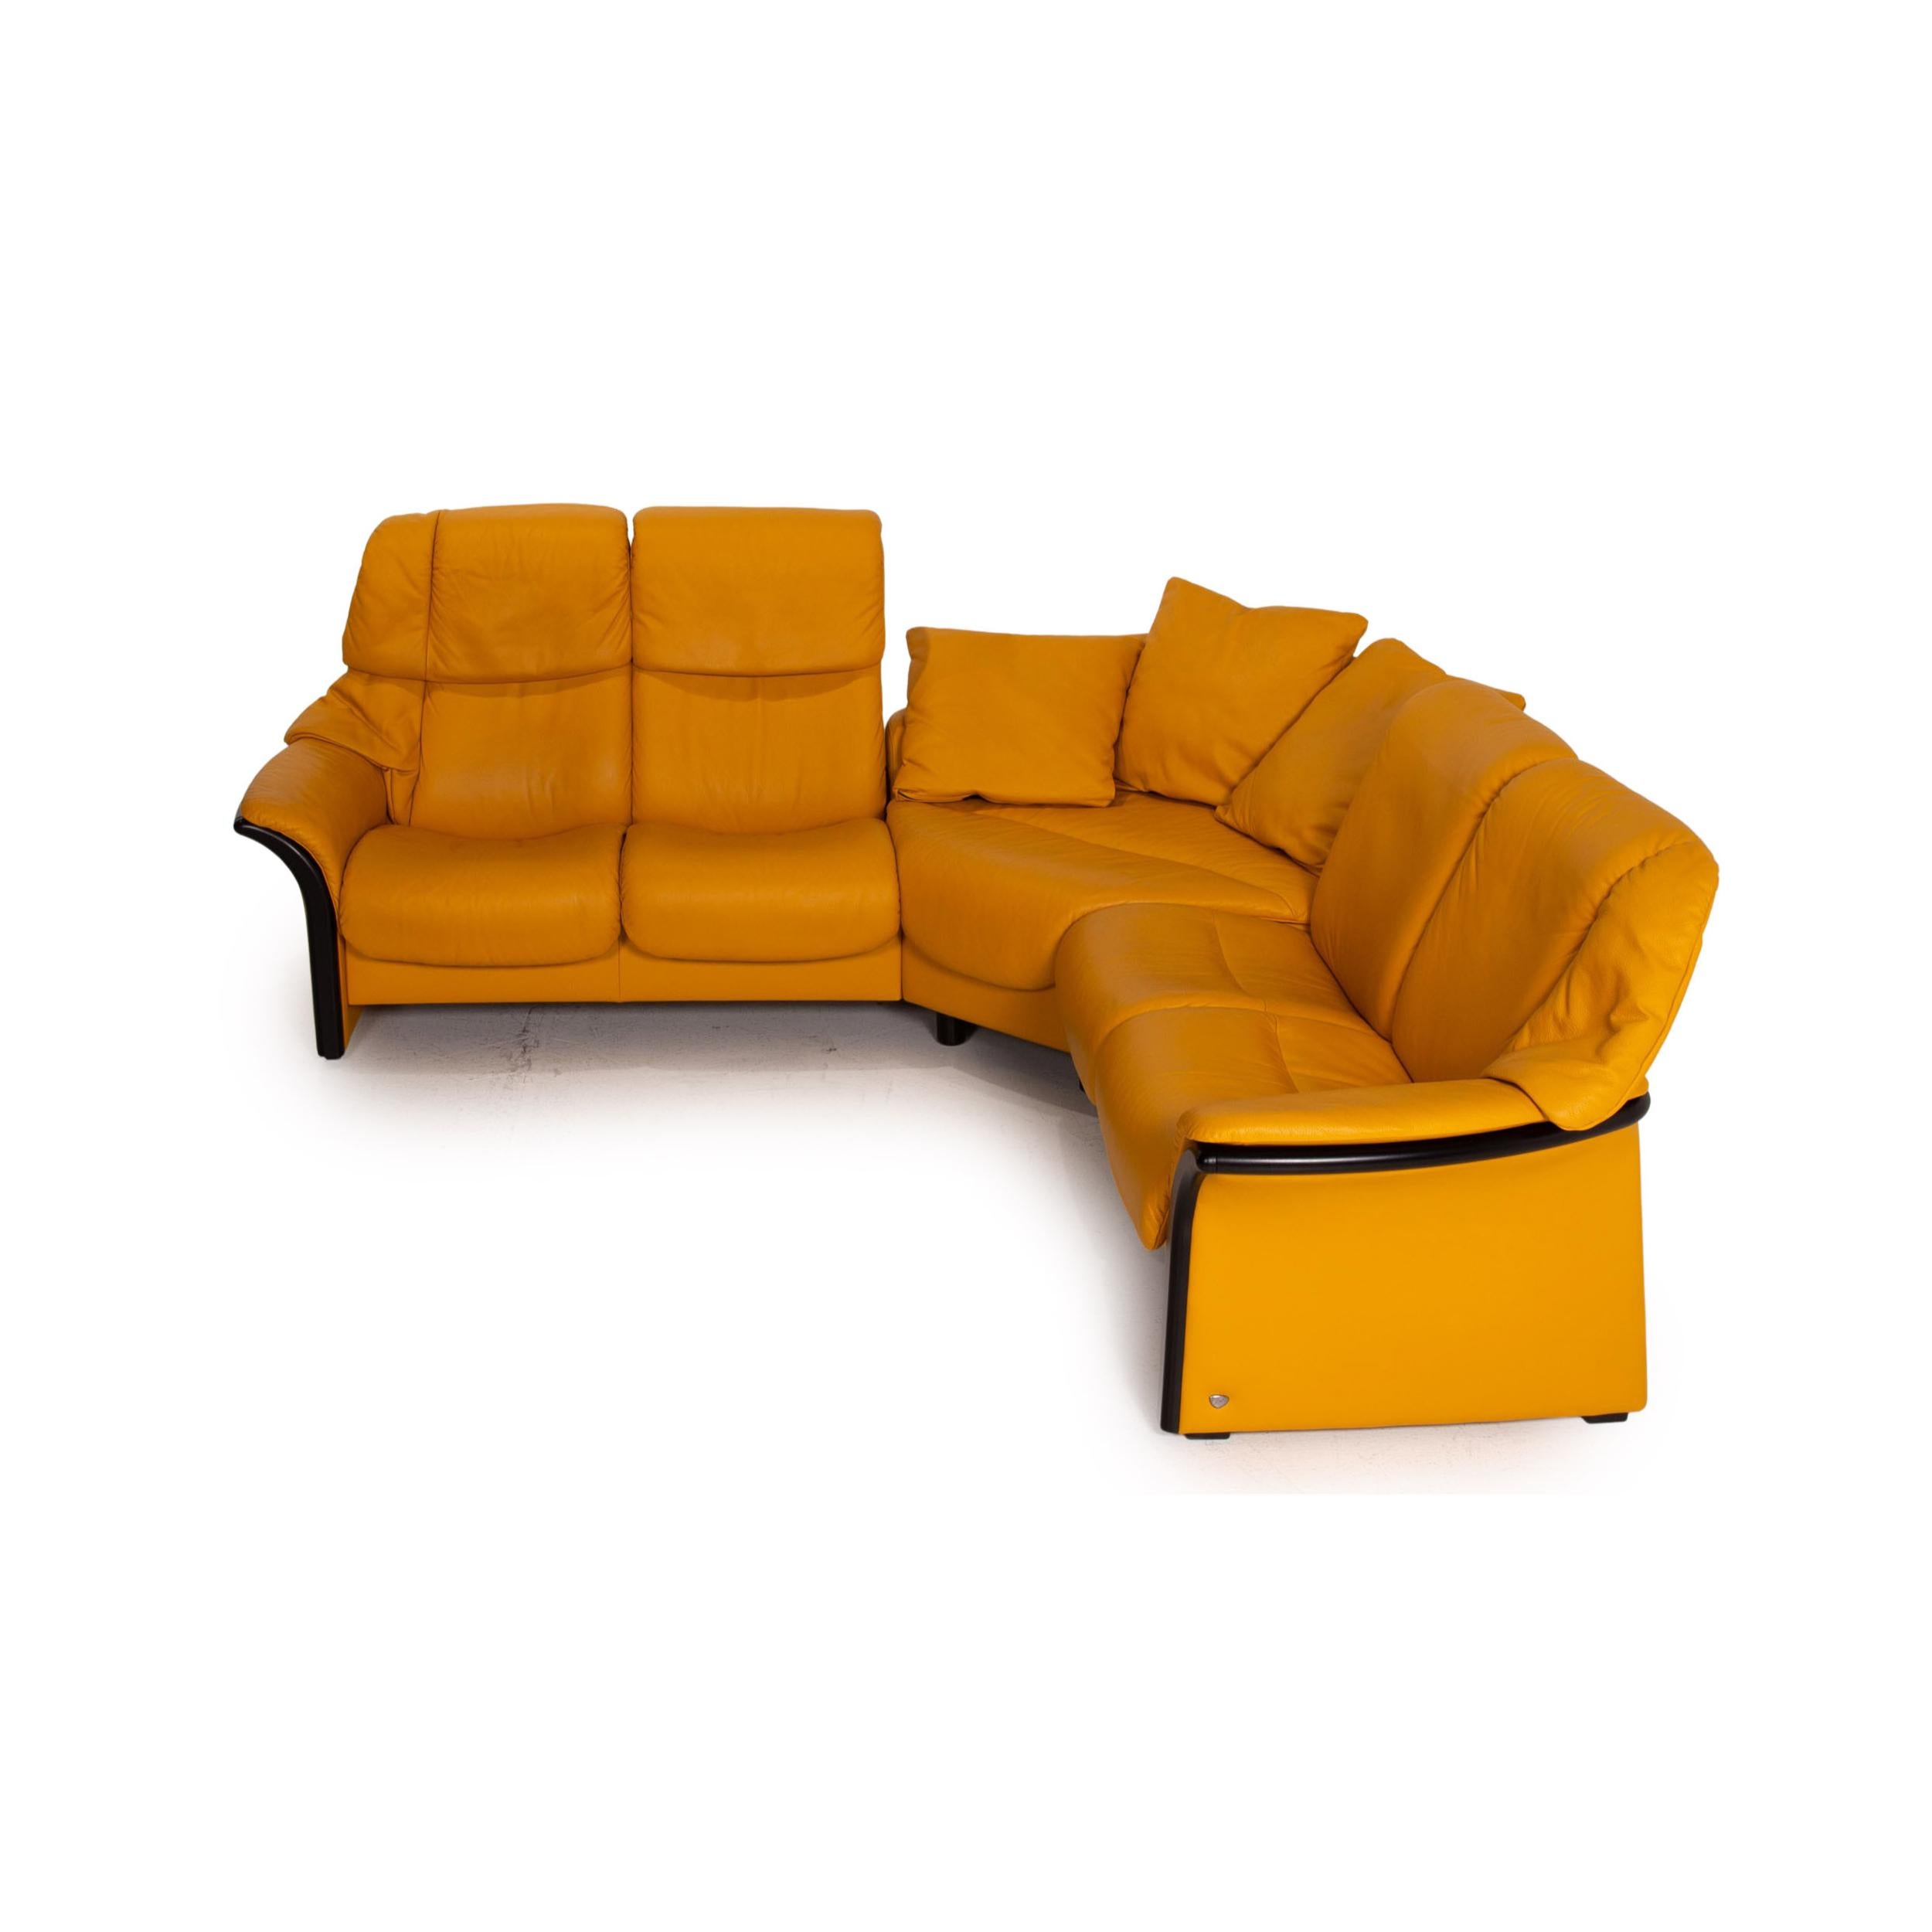 Stressless Eldorado Leather Corner Sofa Yellow Relax Function Sofa Couch 3